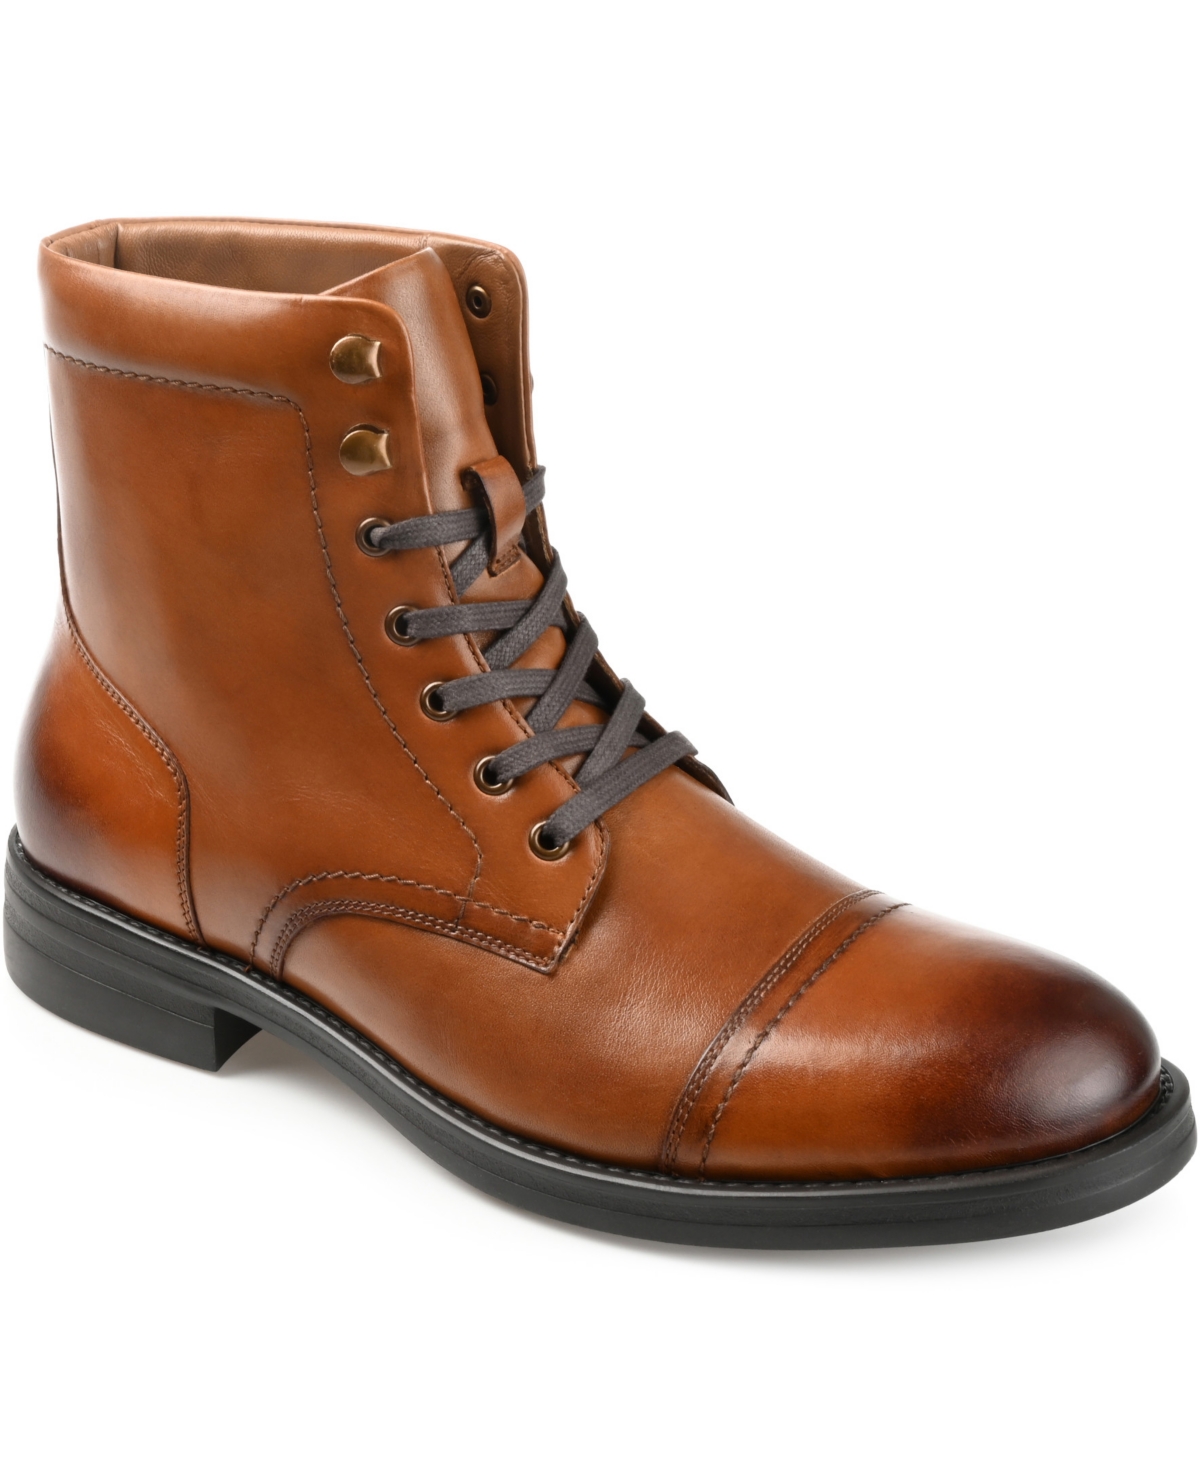 Men's Darko Cap Toe Ankle Boot - Cognac